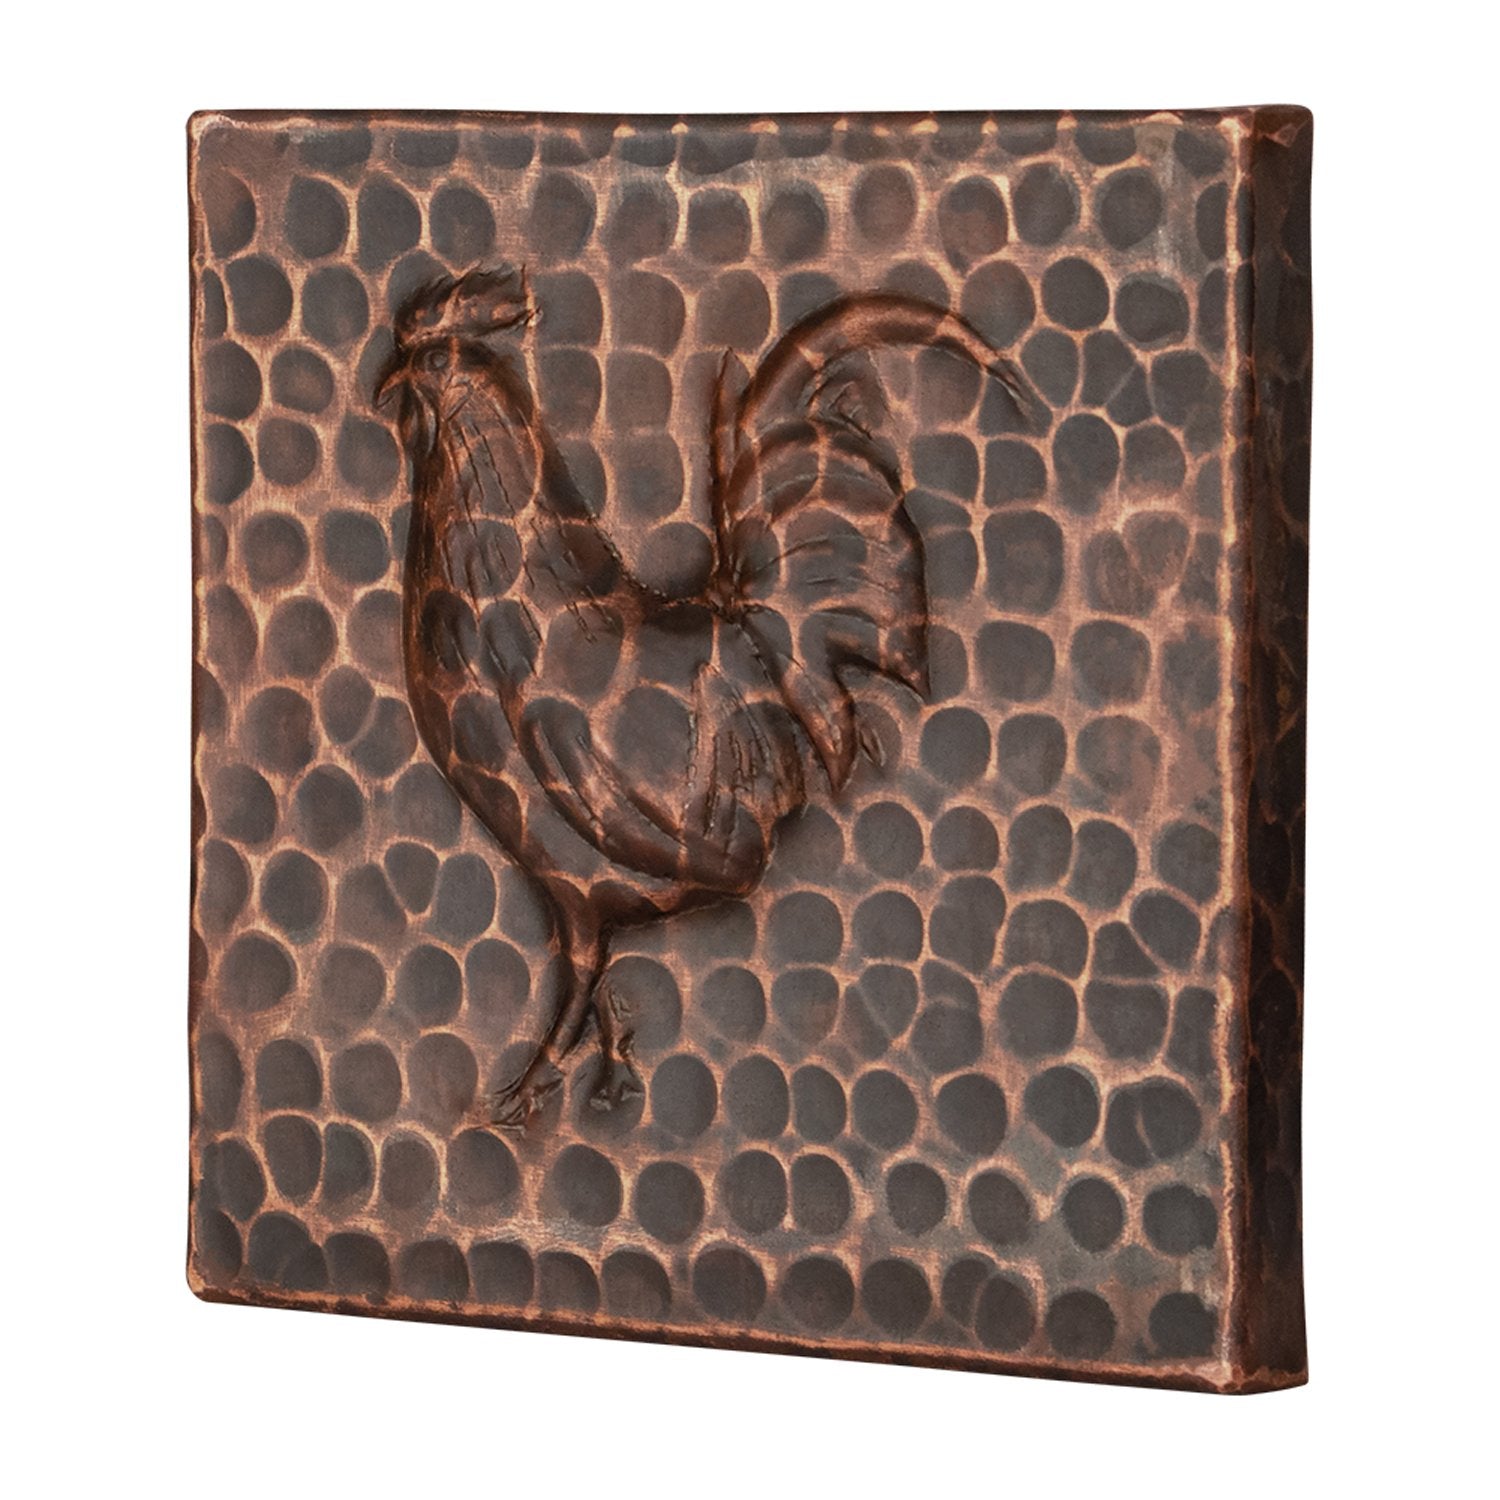 4" x 4" Hammered Copper Rooster Tile